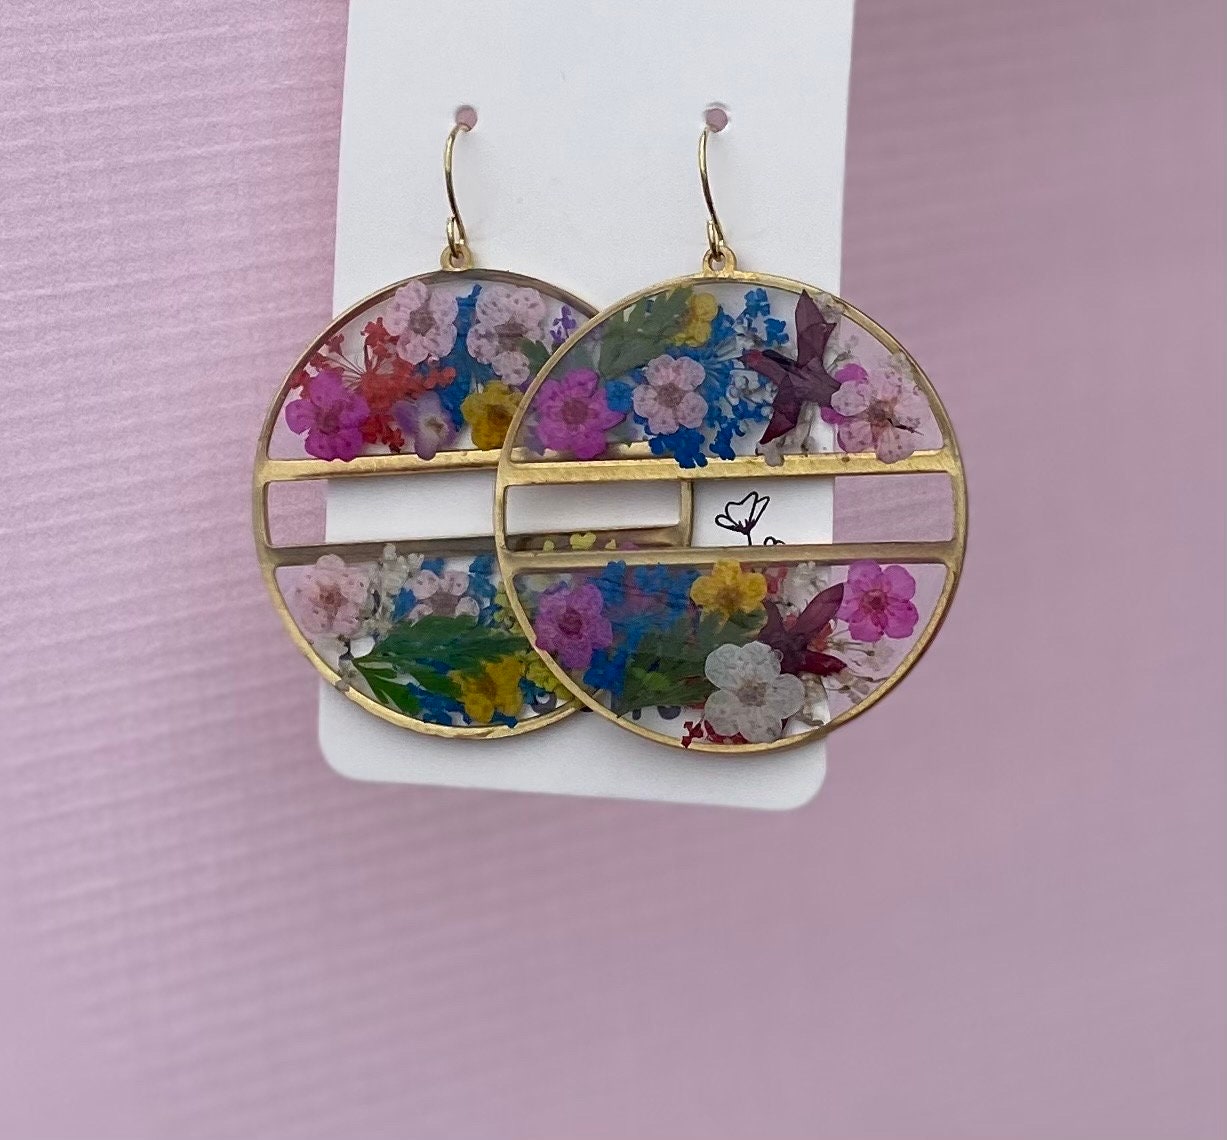 Handmade with pressed flowers & Ferns. Hypoallergenic Earrings. Terrarium earrings. 14K gold